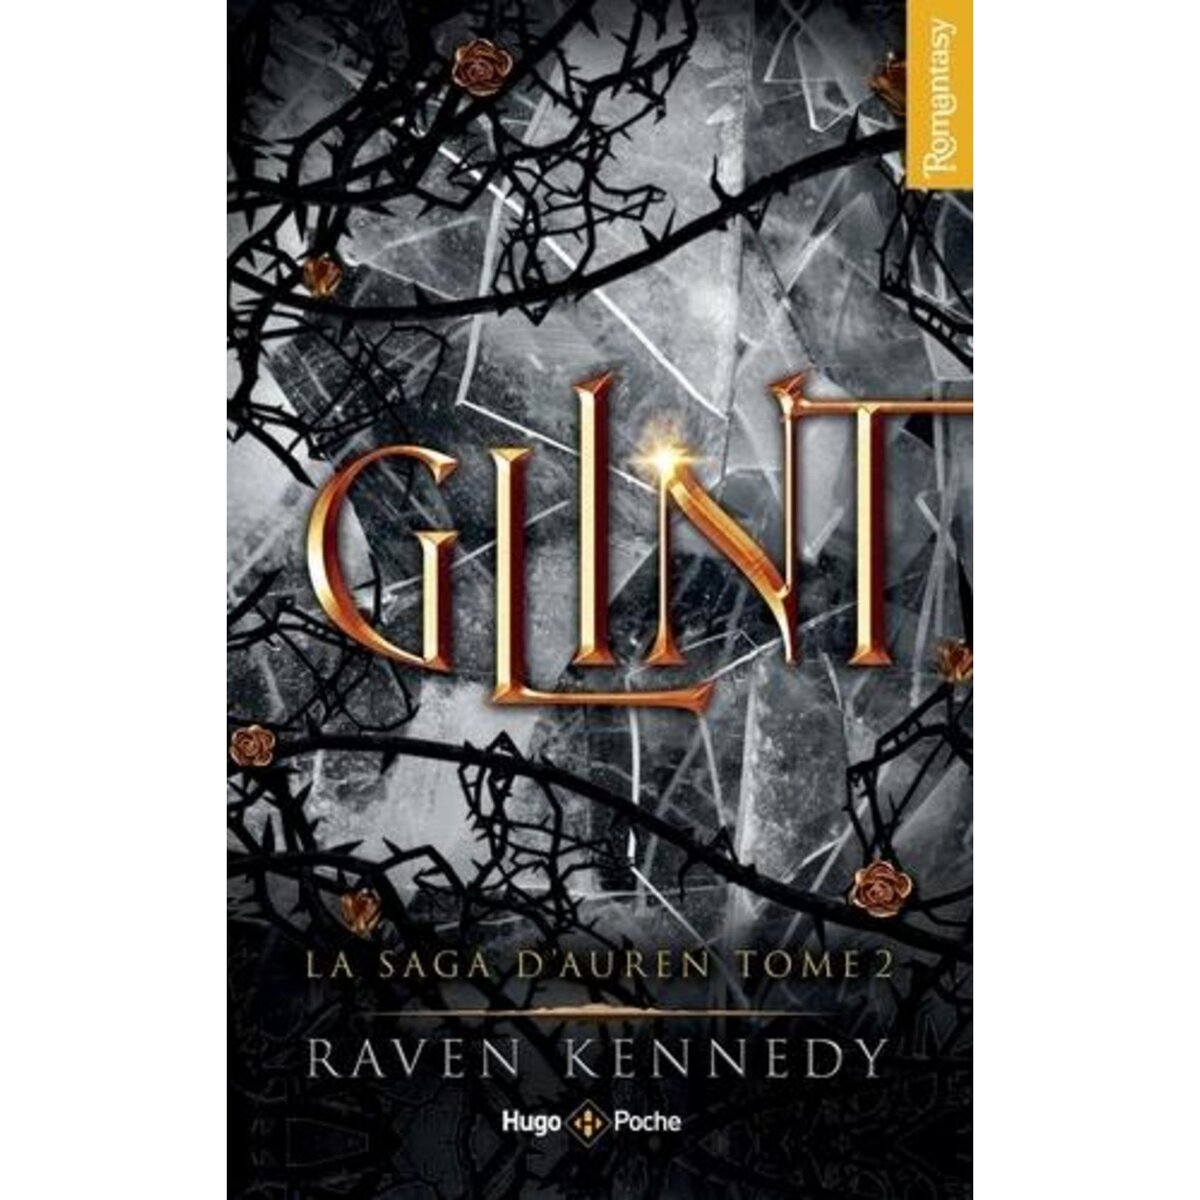  LA SAGA D'AUREN TOME 2 : GLINT, Kennedy Raven